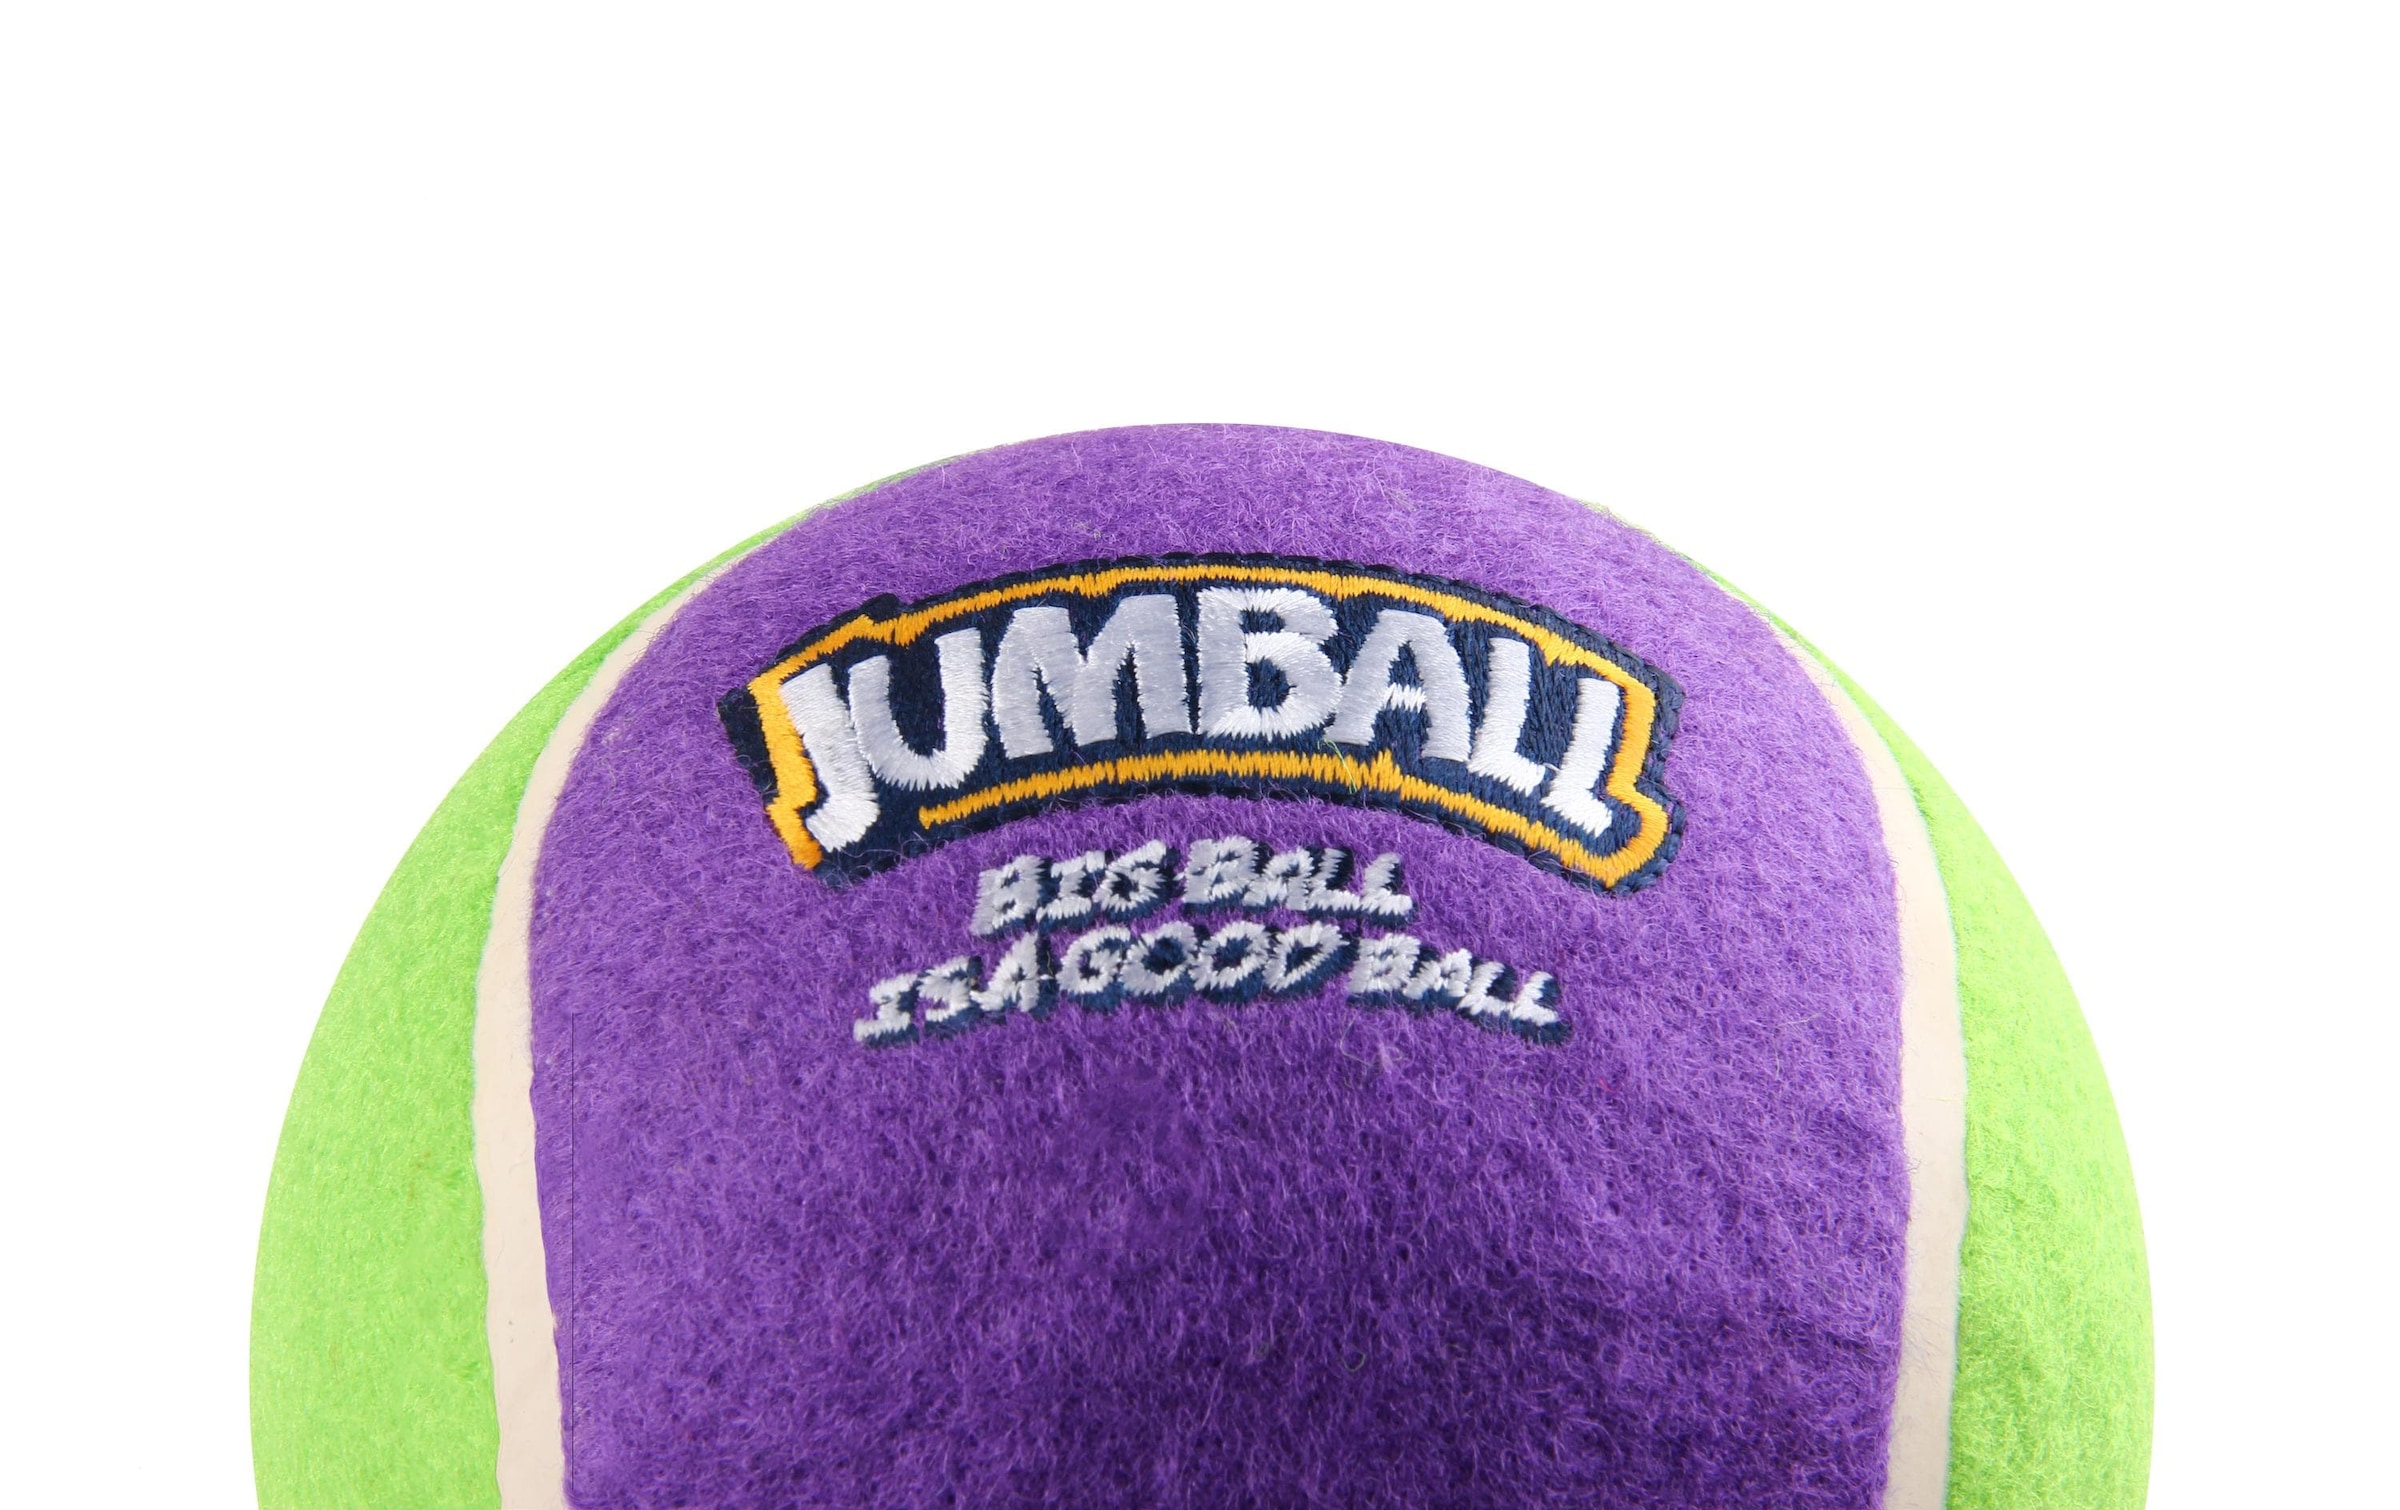 GiGwi Tier-Beschäftigungsspielzeug »Jumpball, Tennis Ball, Grün/Violett«, Kunststoff